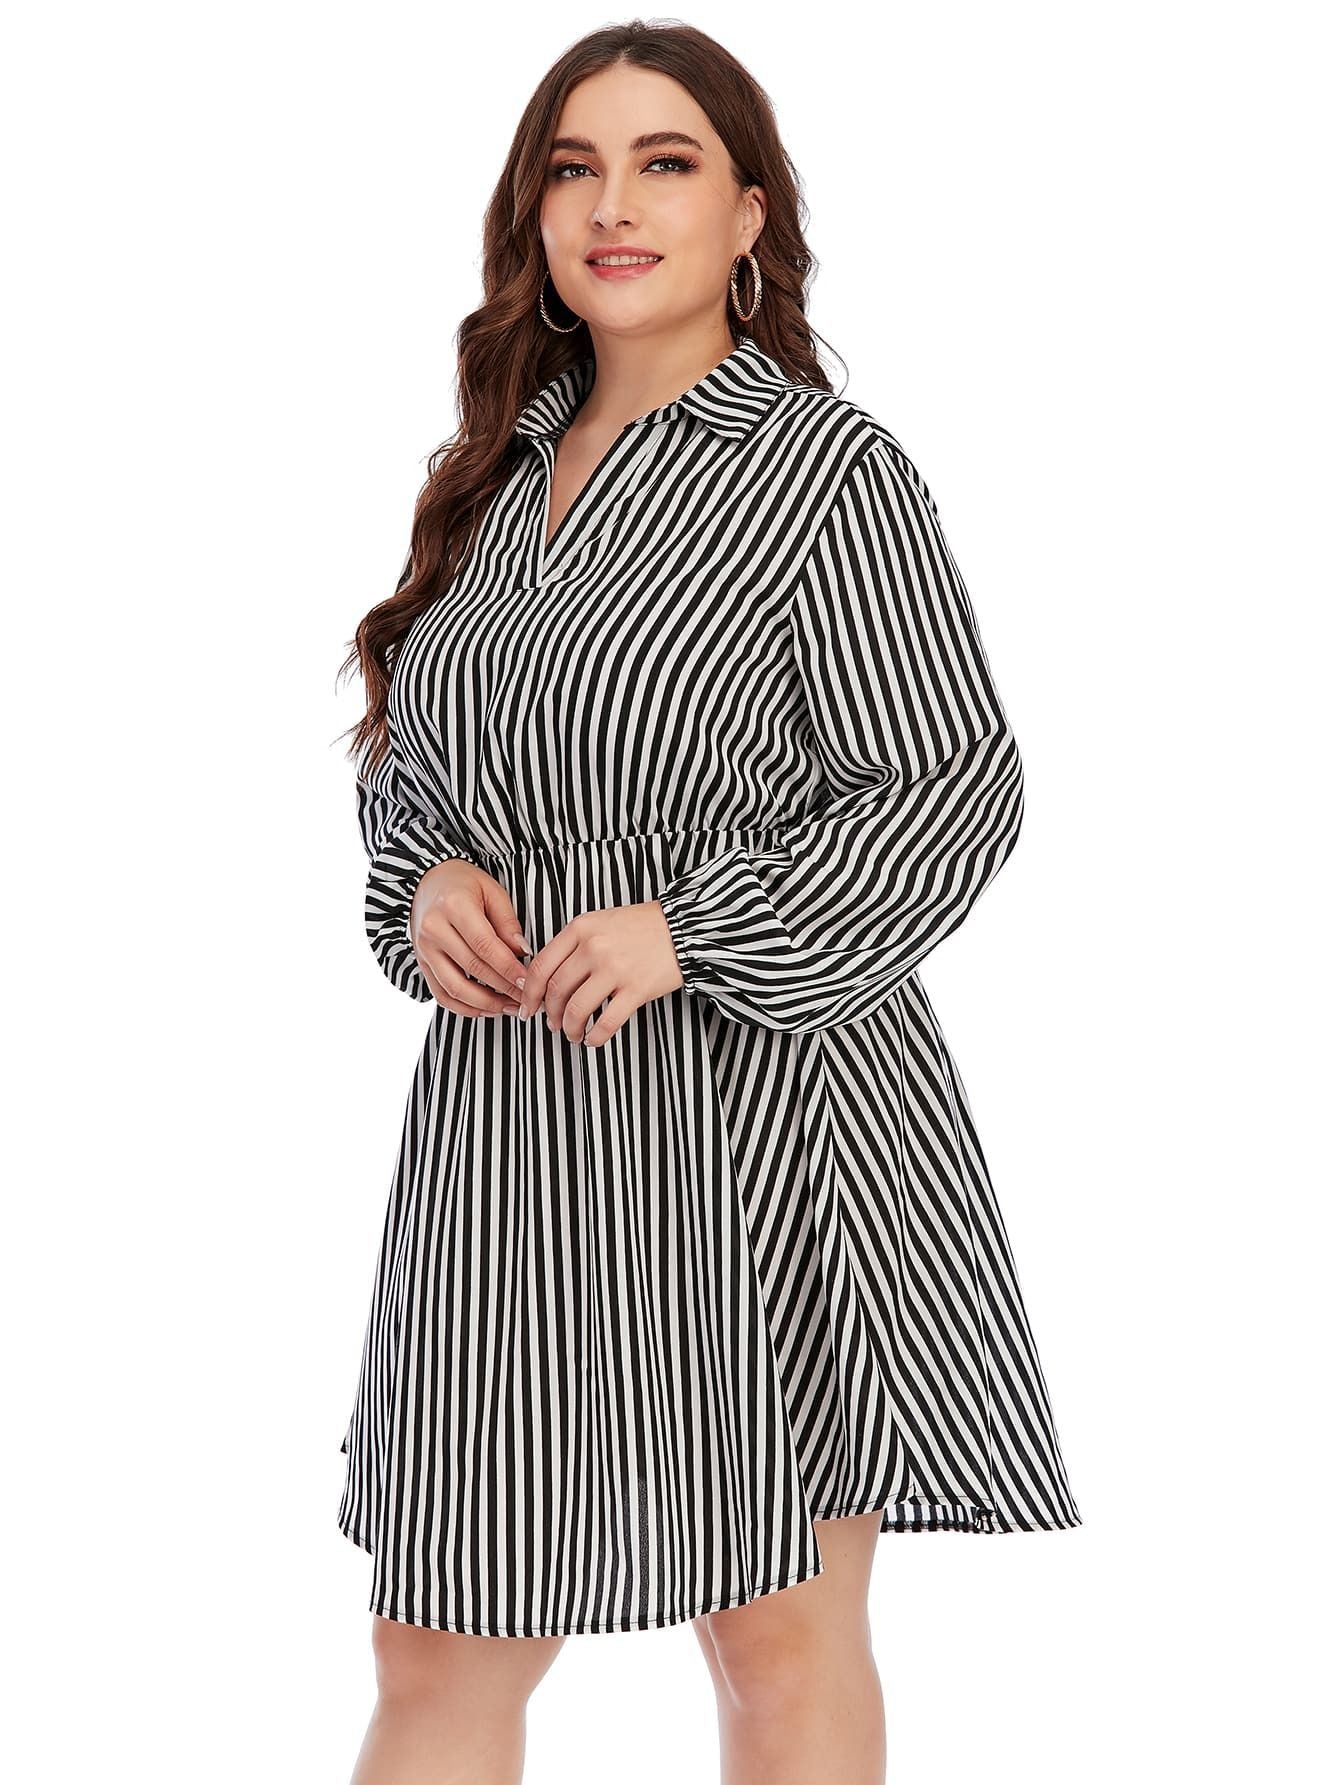 Striped Casual Striped Collared Dress